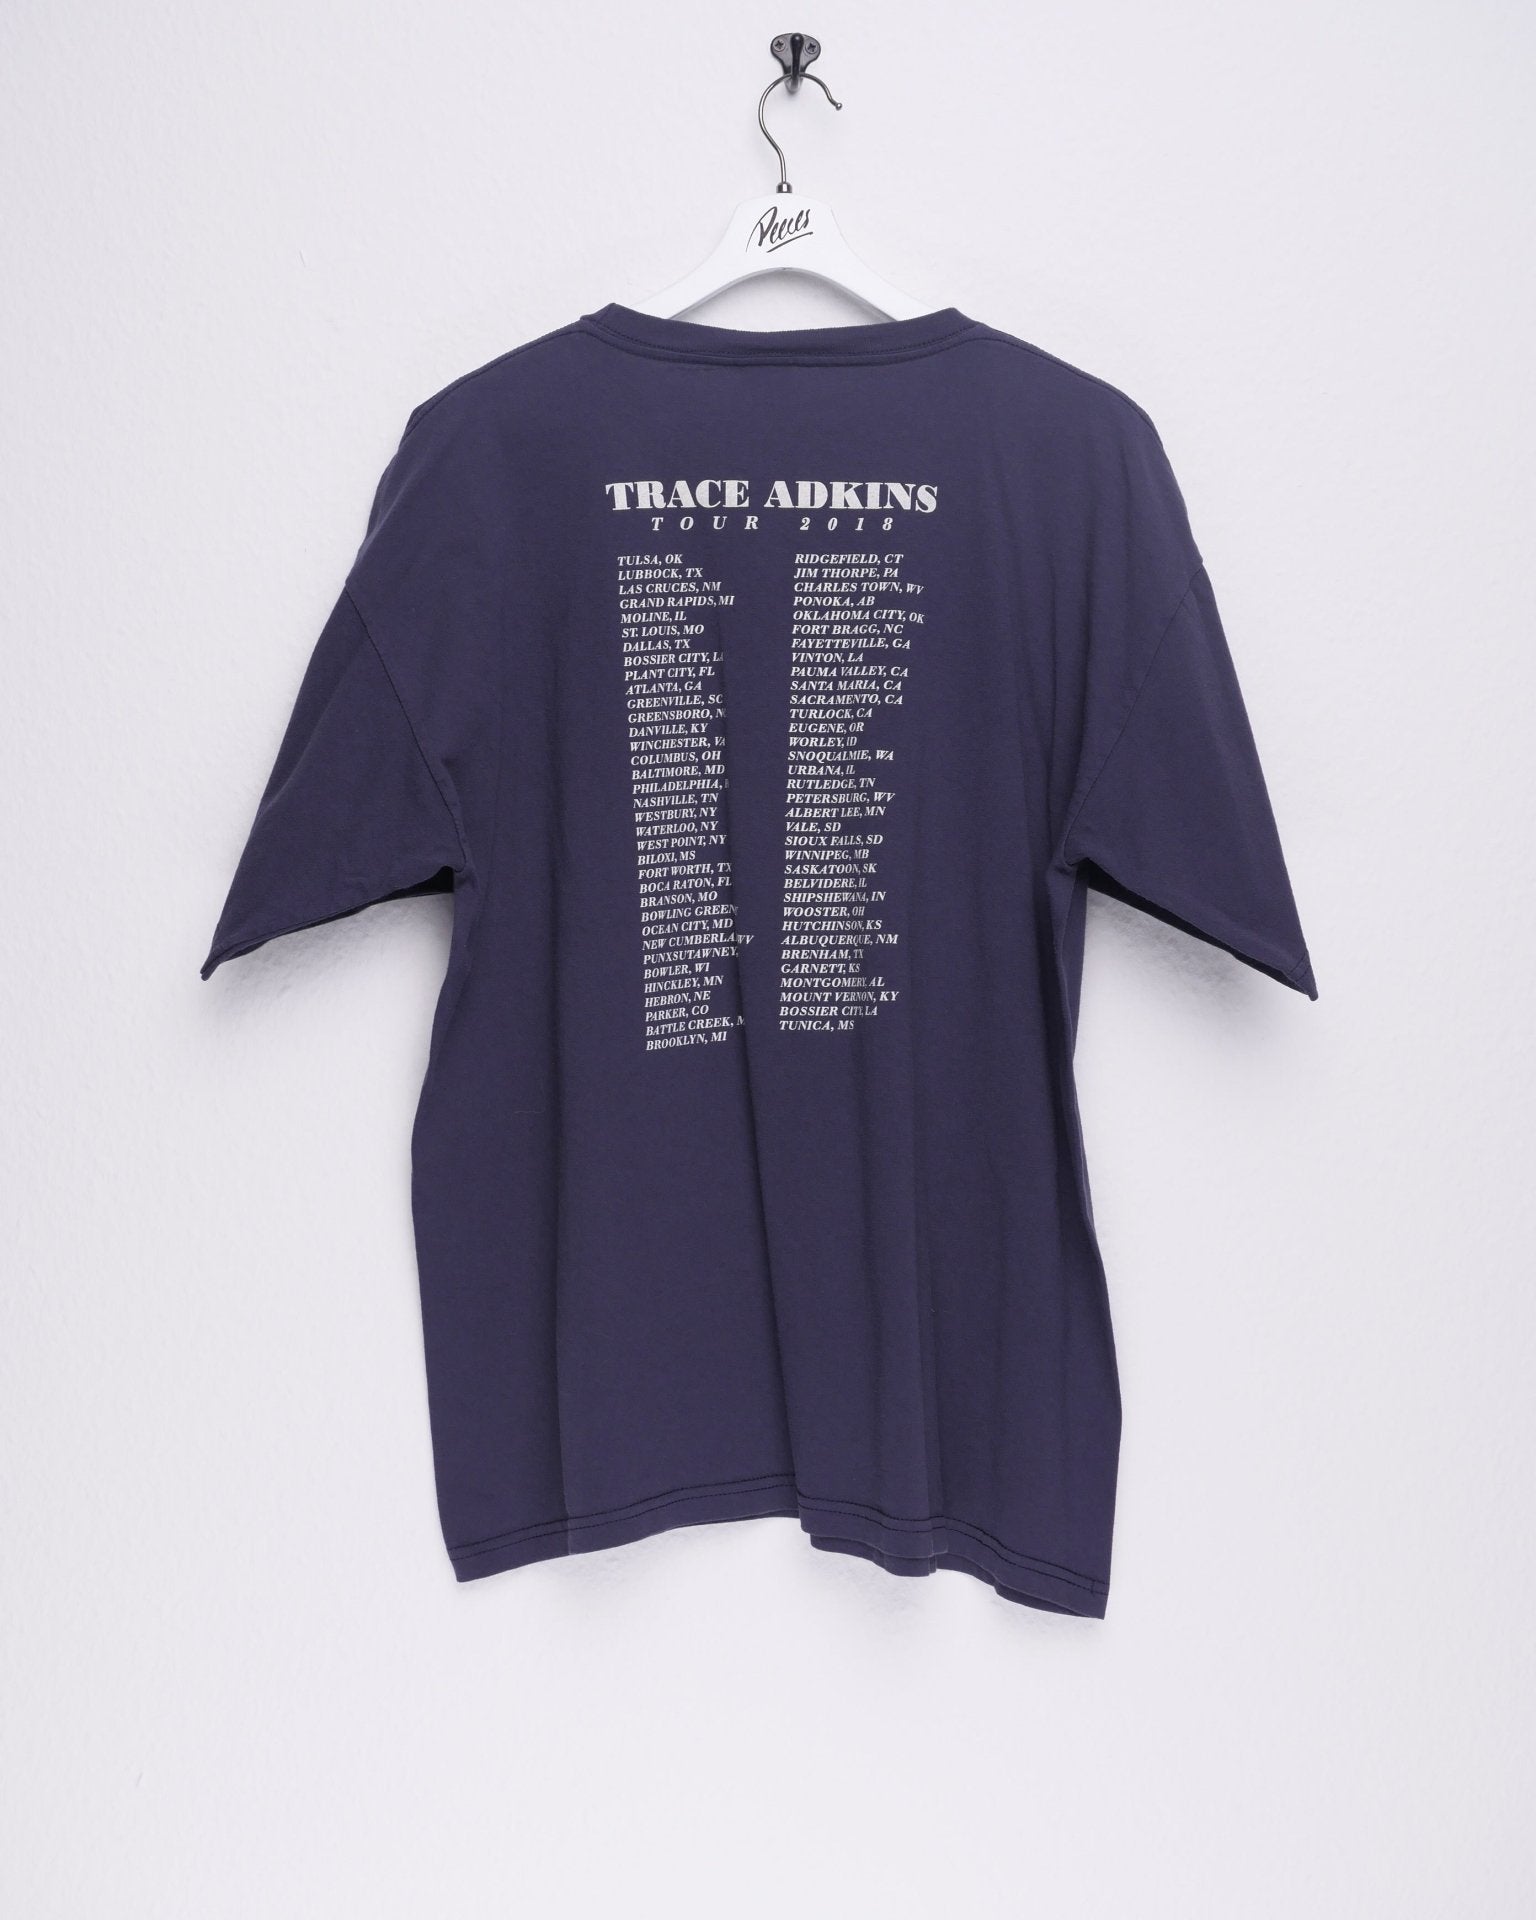 Trace Adkins printed 2018 America Tour Shirt - Peeces